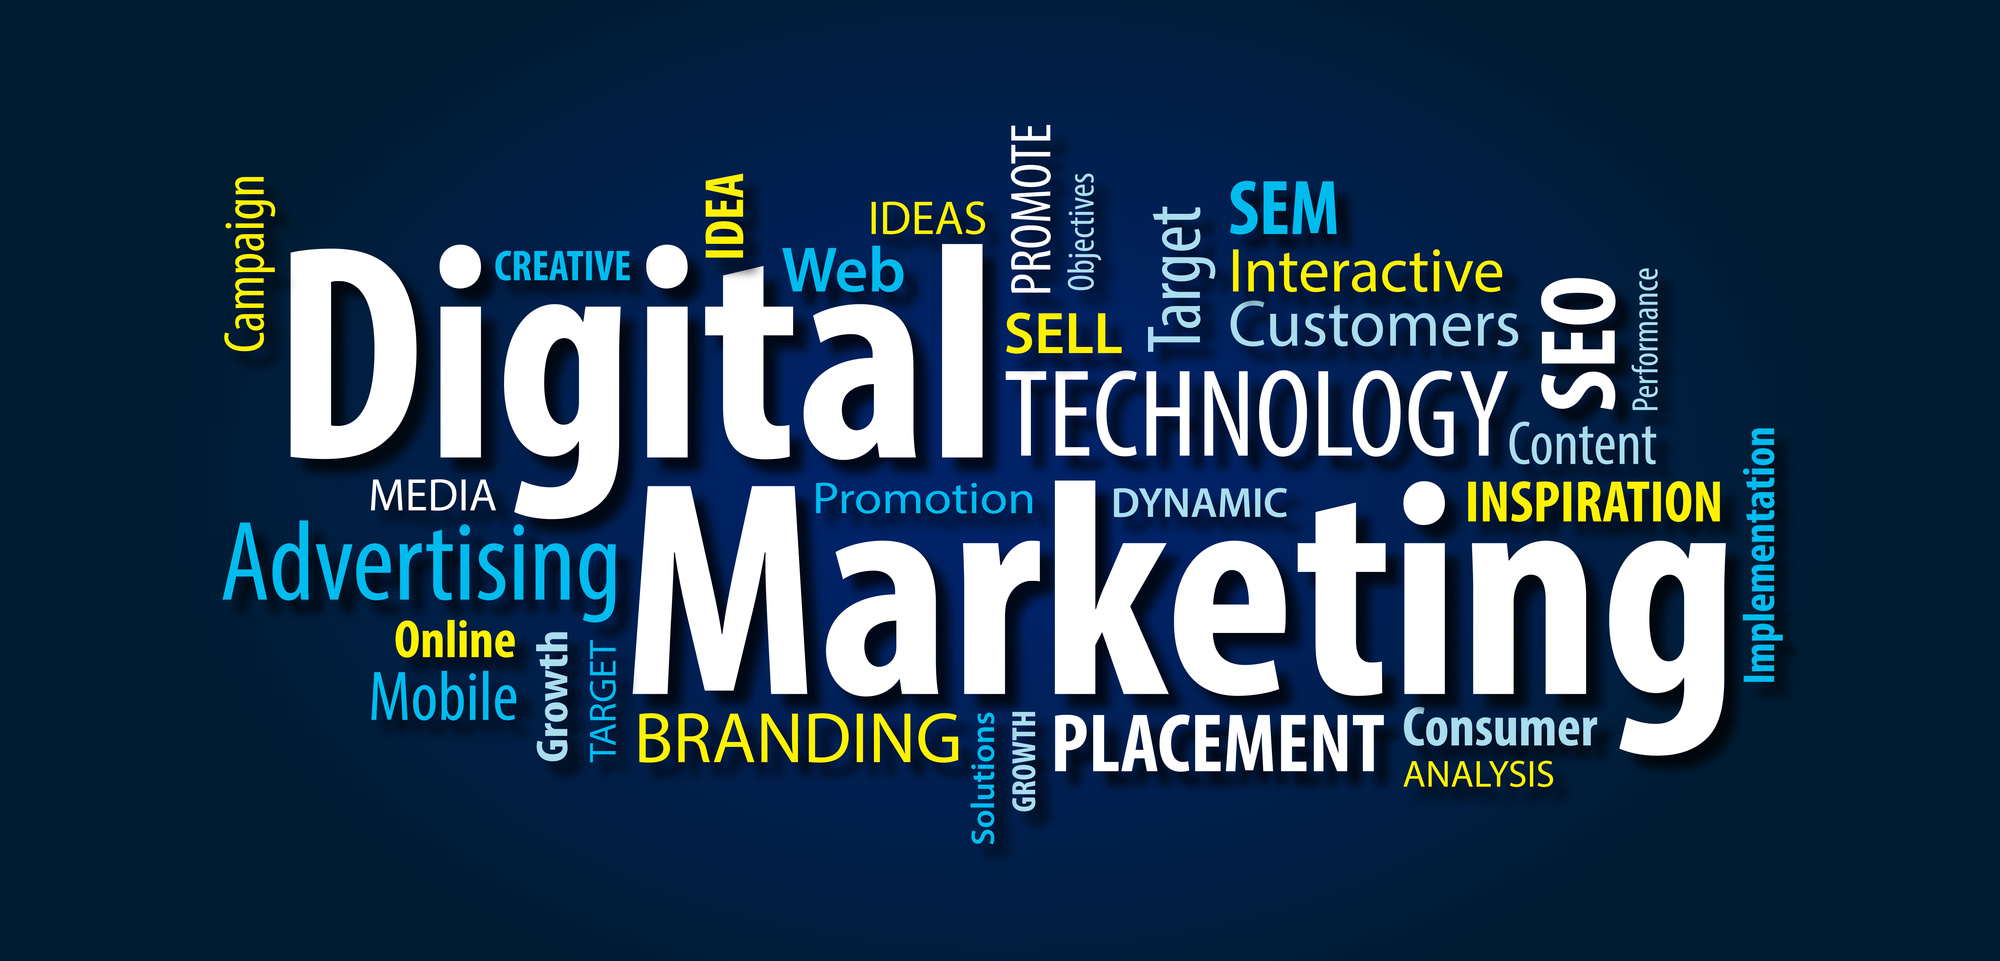 Digital Marketing Campaign Template